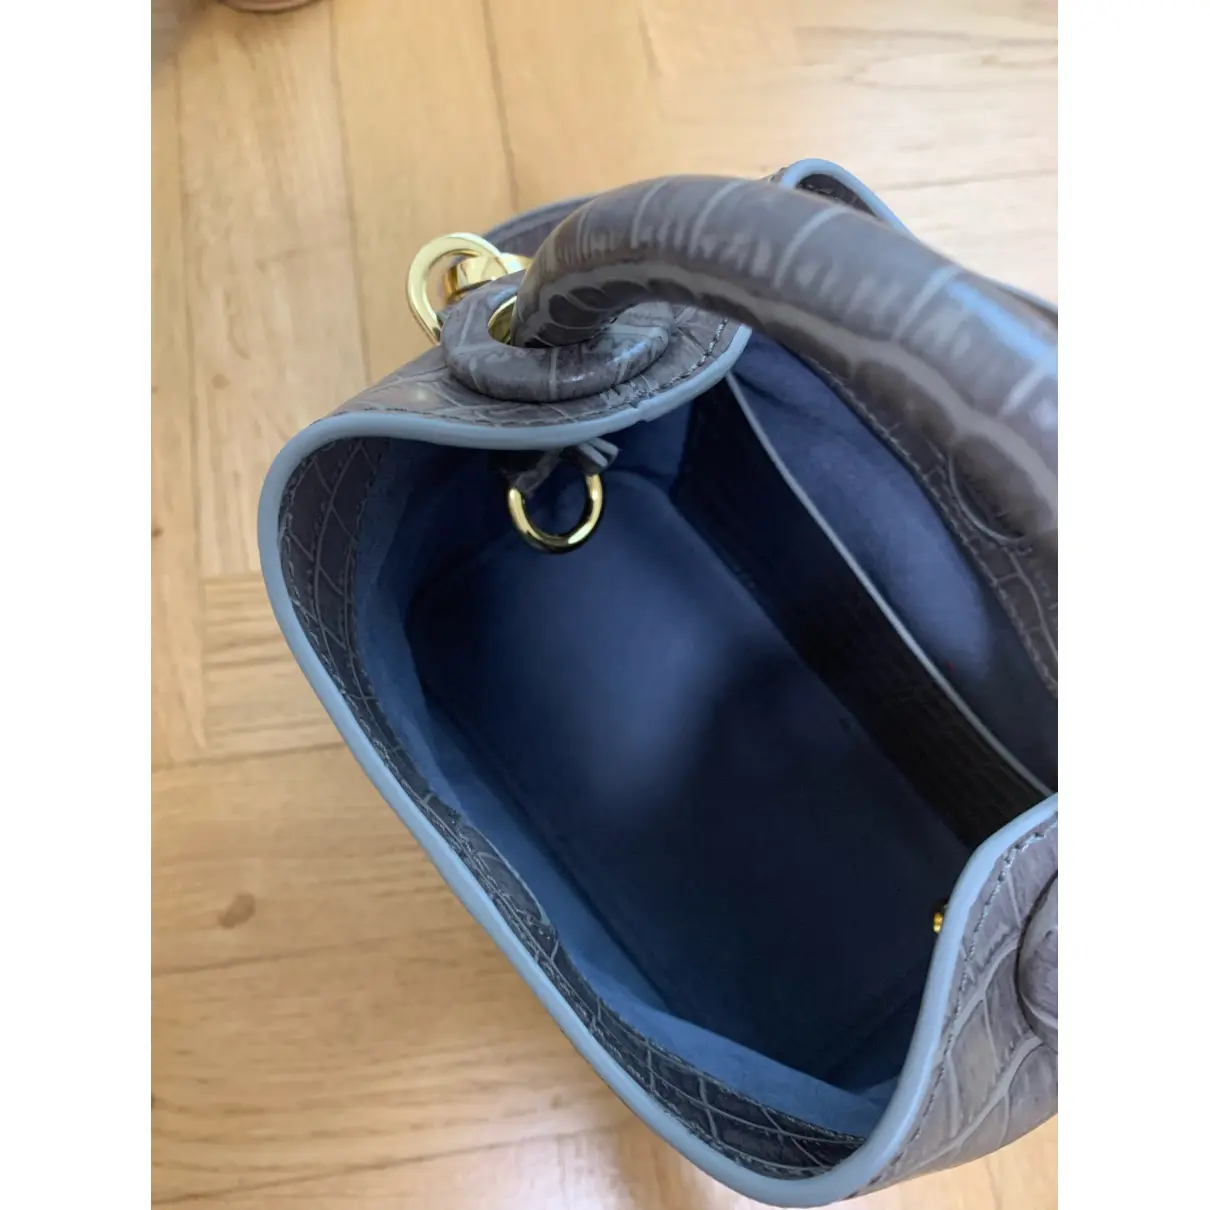 Leather handbag Elleme